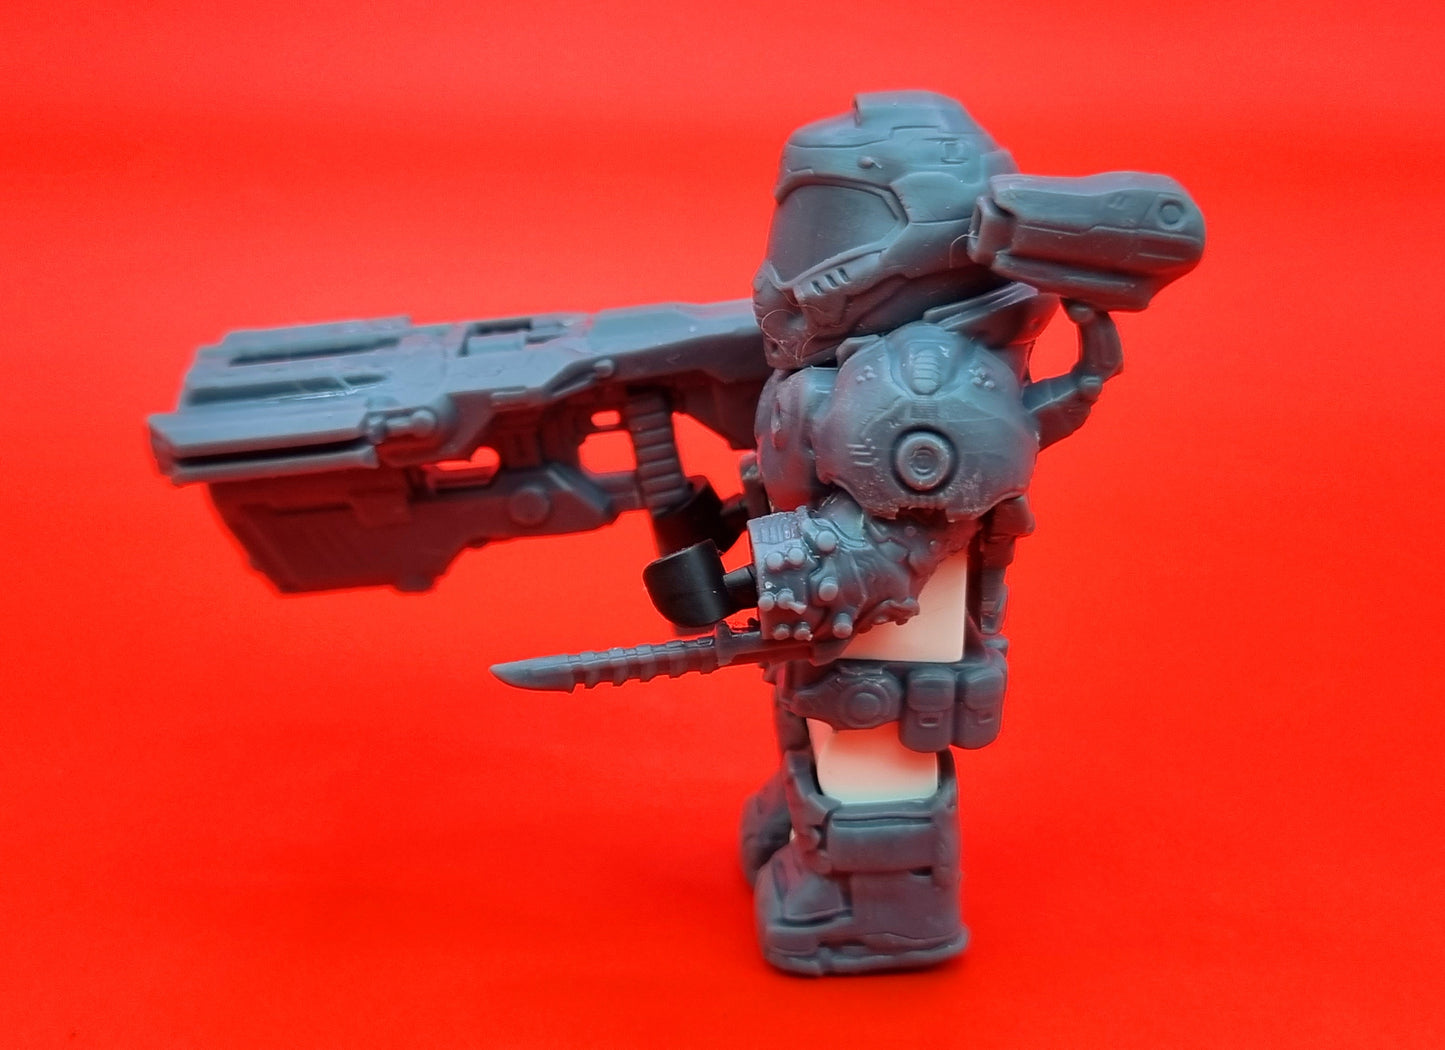 Building toy custom 3D printed eternaly slayer! Printed in 12k high resolution!